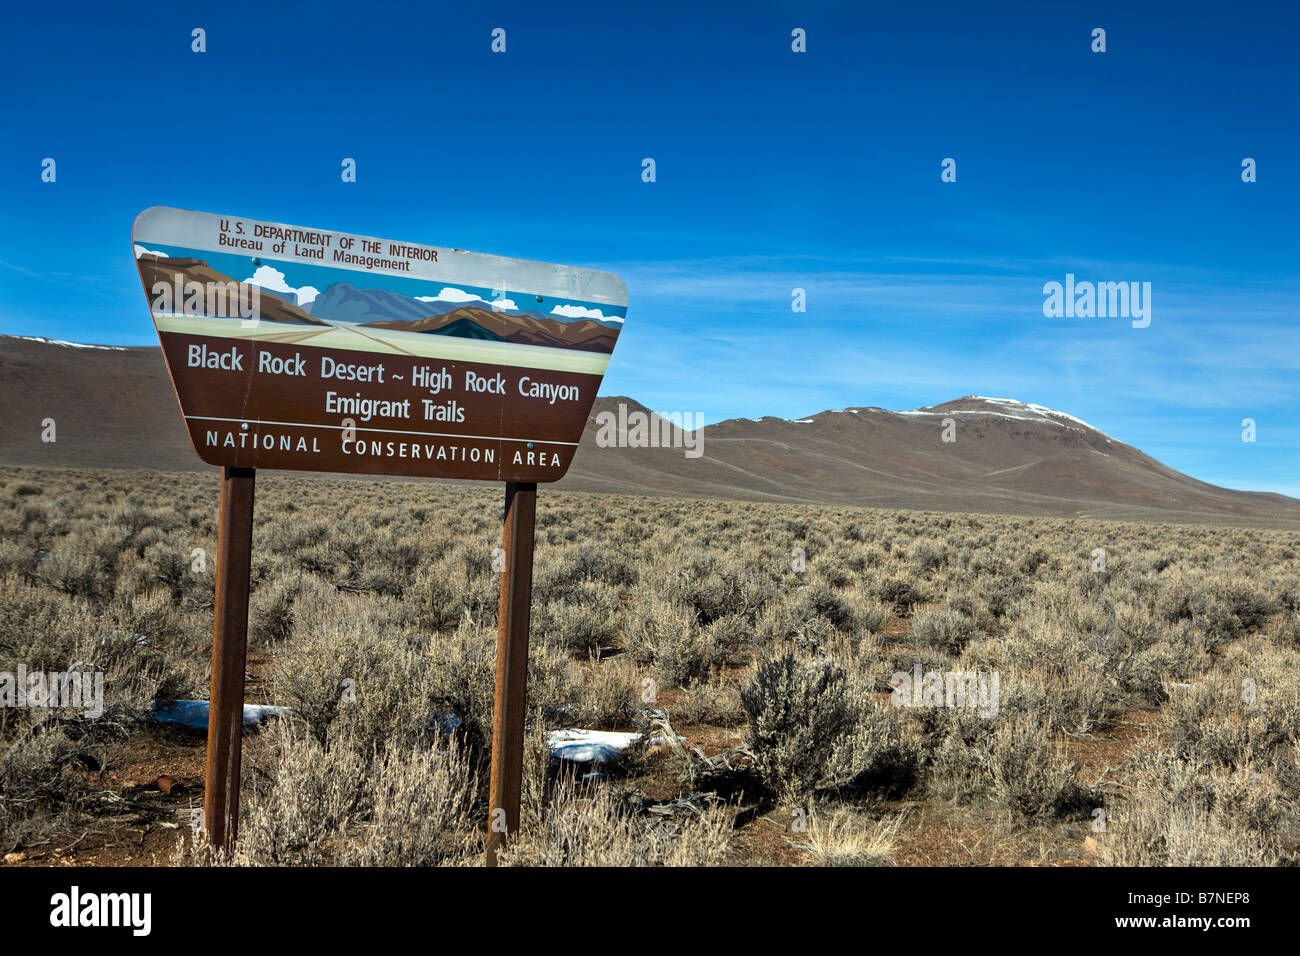 Bureau of Land Management boundary sign for the Black Rock Desert High Rock Canyon Emigrant Trails National Conservation Area Stock Photo